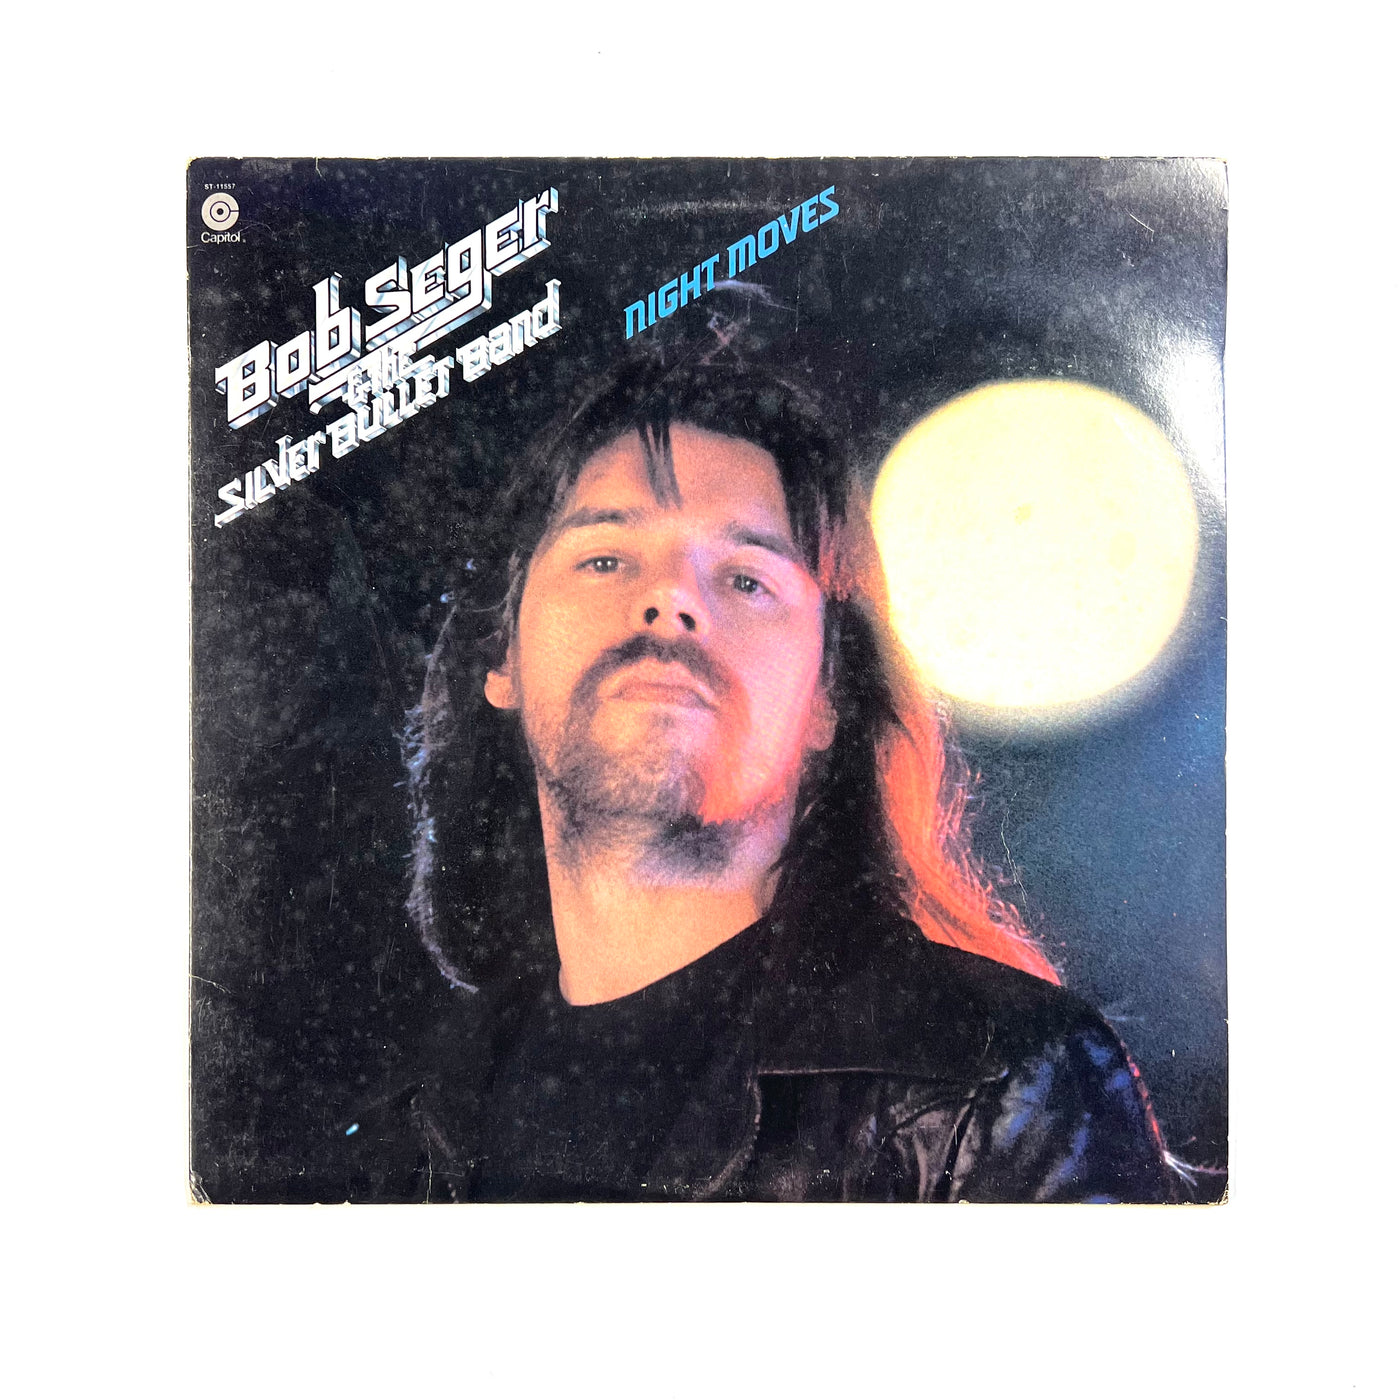 Bob Seger & The Silver Bullet Band – Night Moves